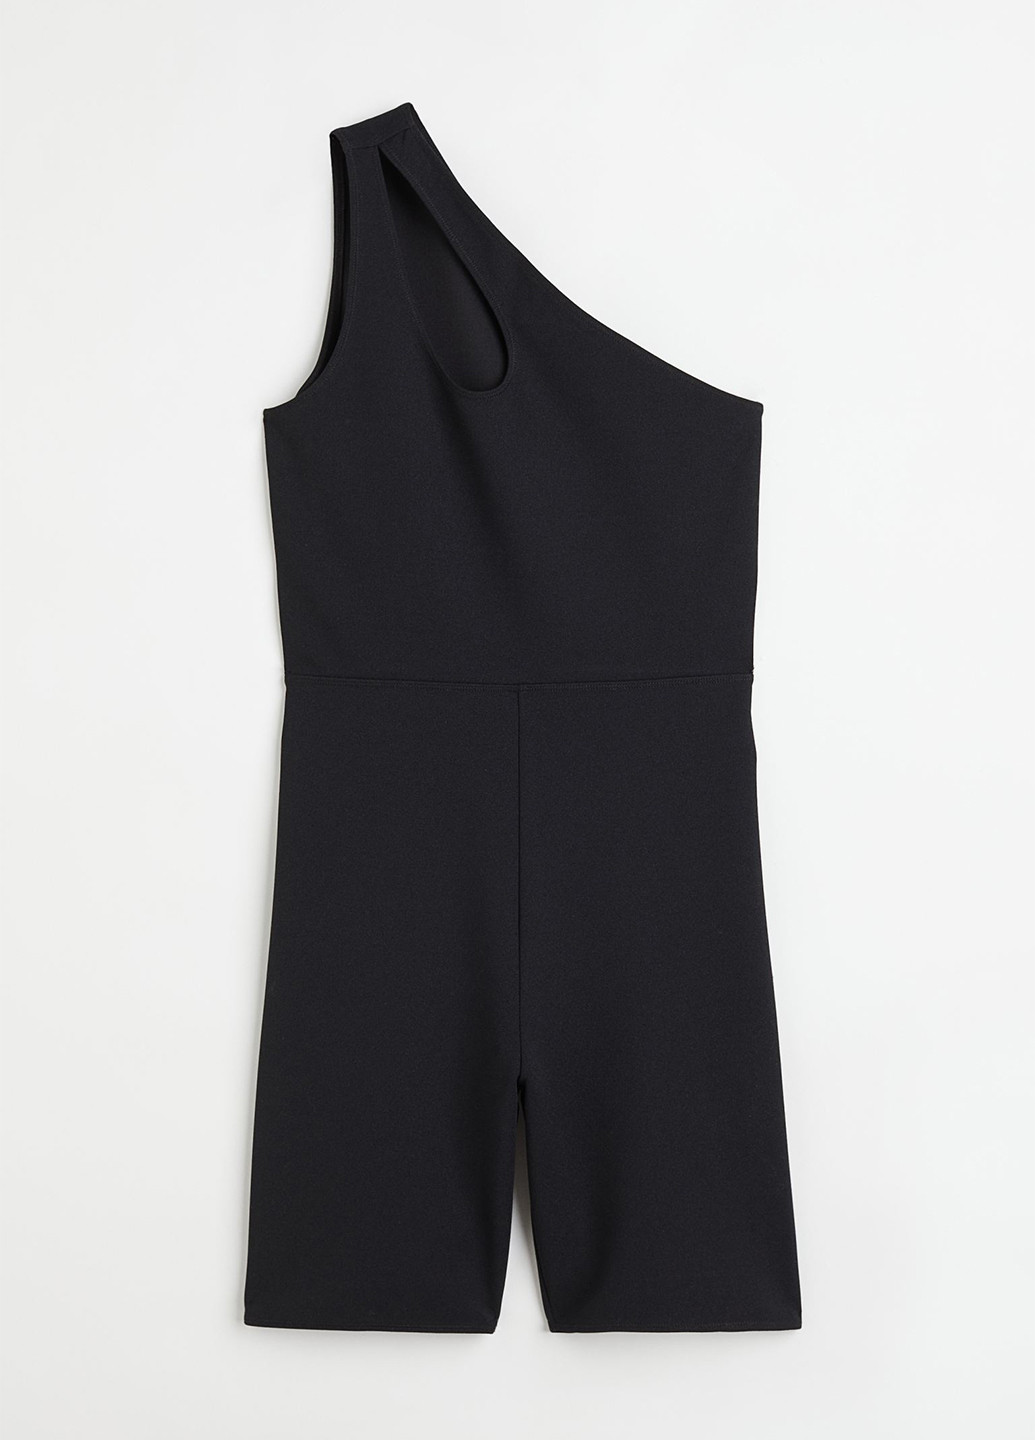 Комбинезон H&M комбинезон-шорты однотонный чёрный кэжуал полиэстер, трикотаж